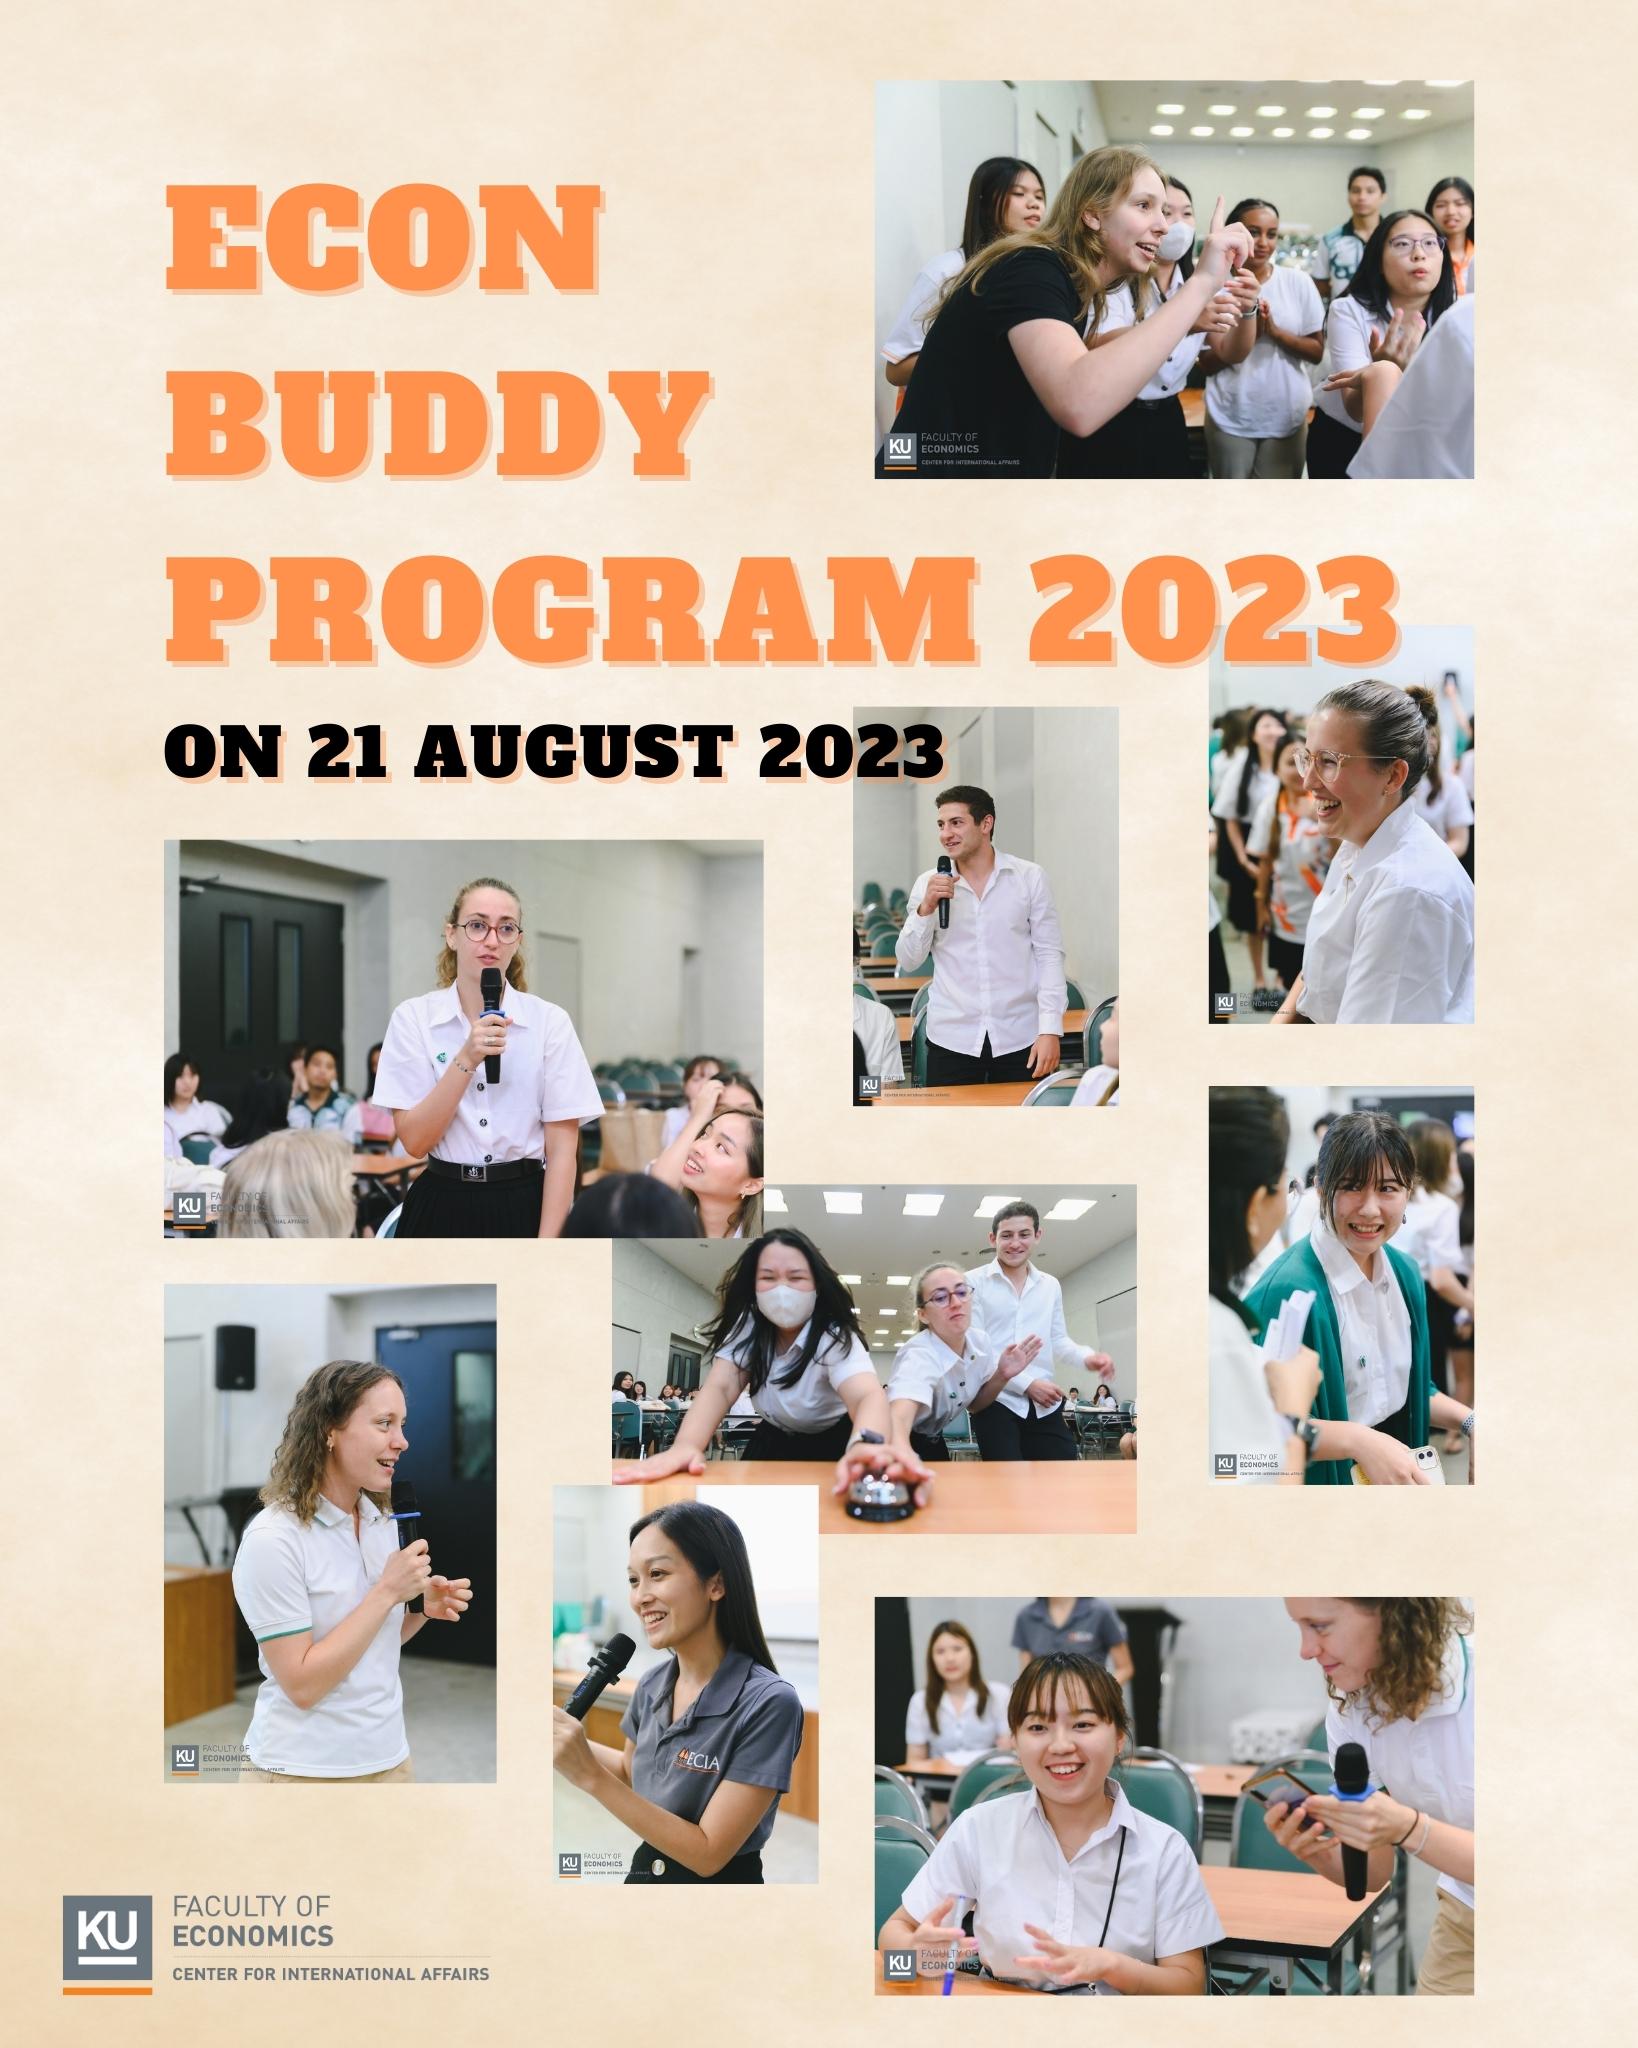 ECON Buddy Program 2023 on Aug 21, 2023